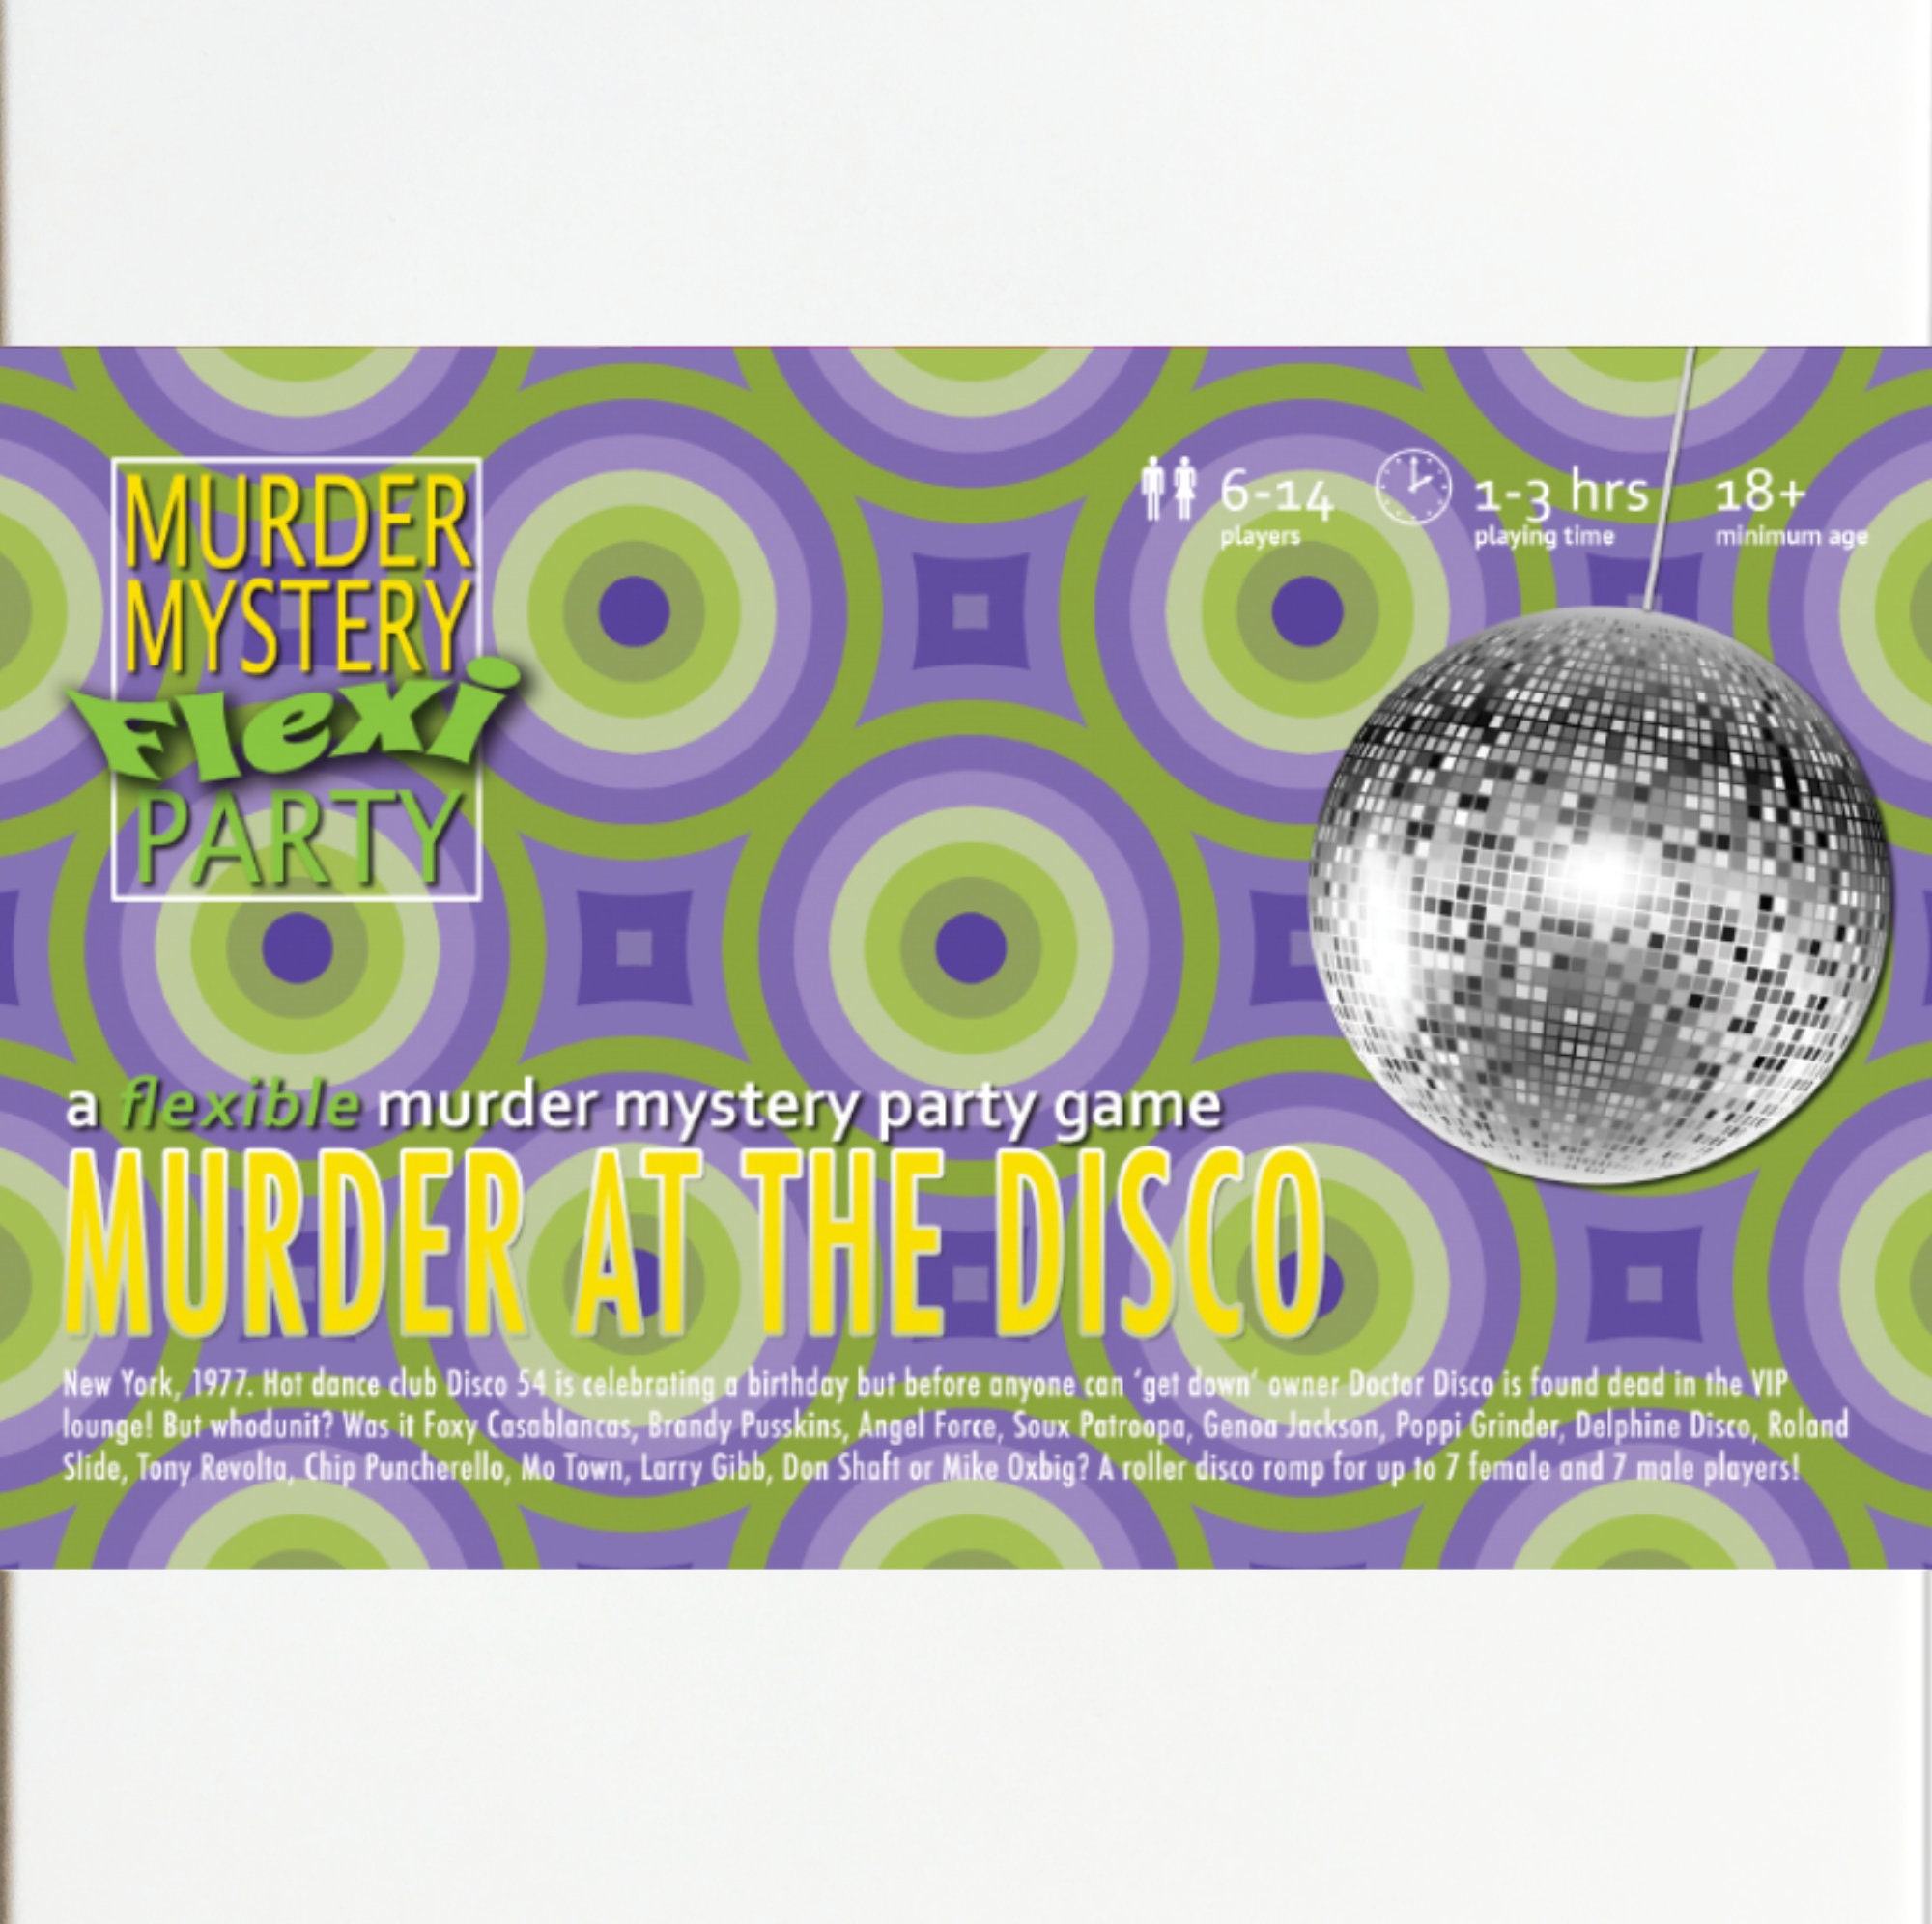 1970s Disco Themed 6-14 Player Flexible Murder Mystery Dinner image photo